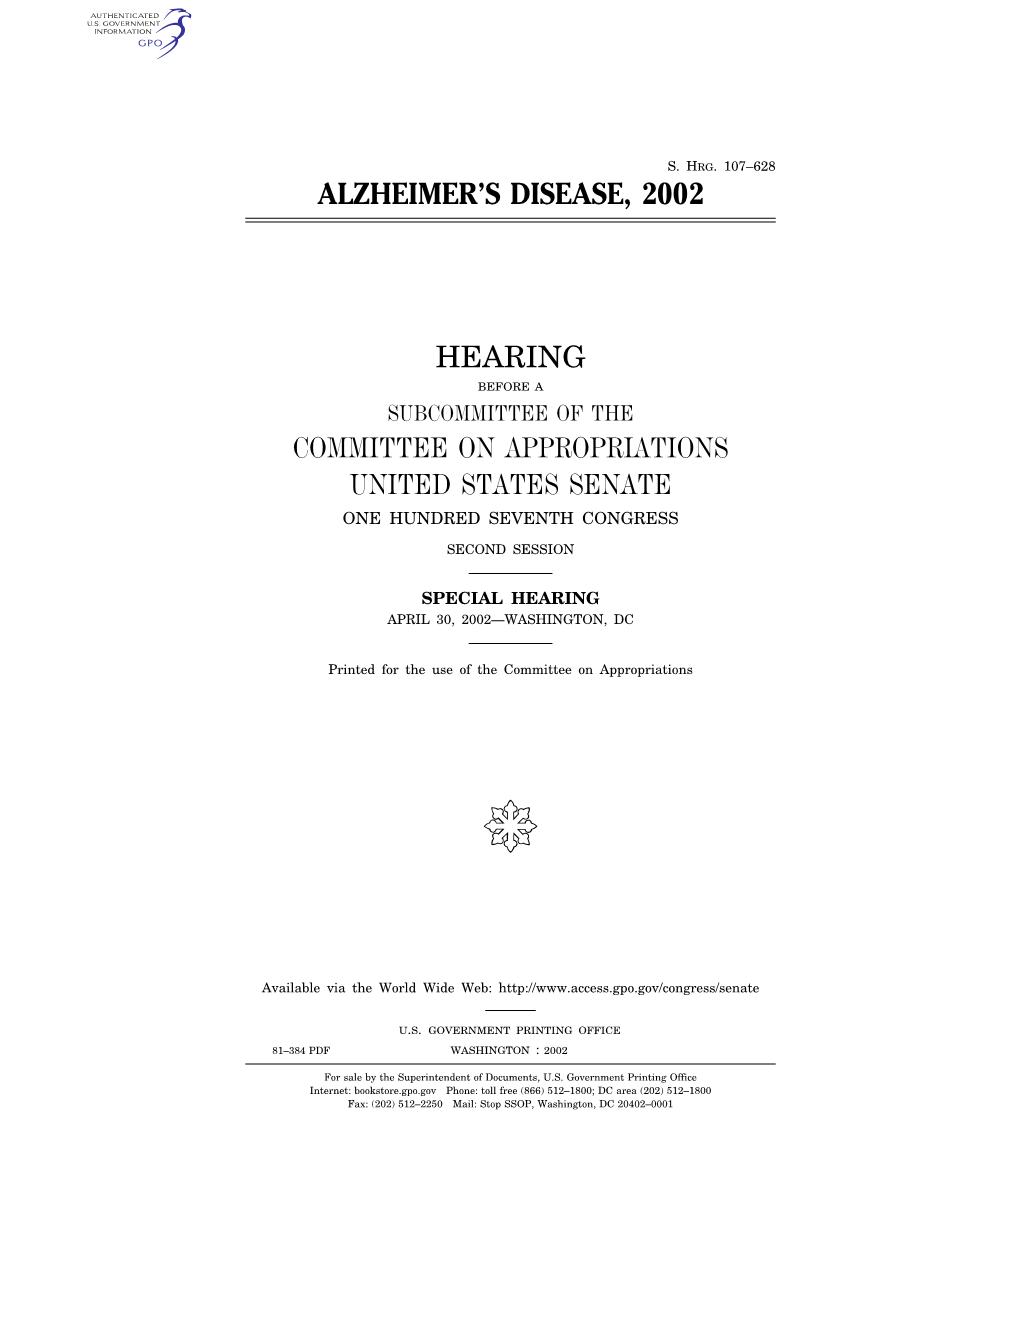 Alzheimer's Disease, 2002 Hearing Committee On